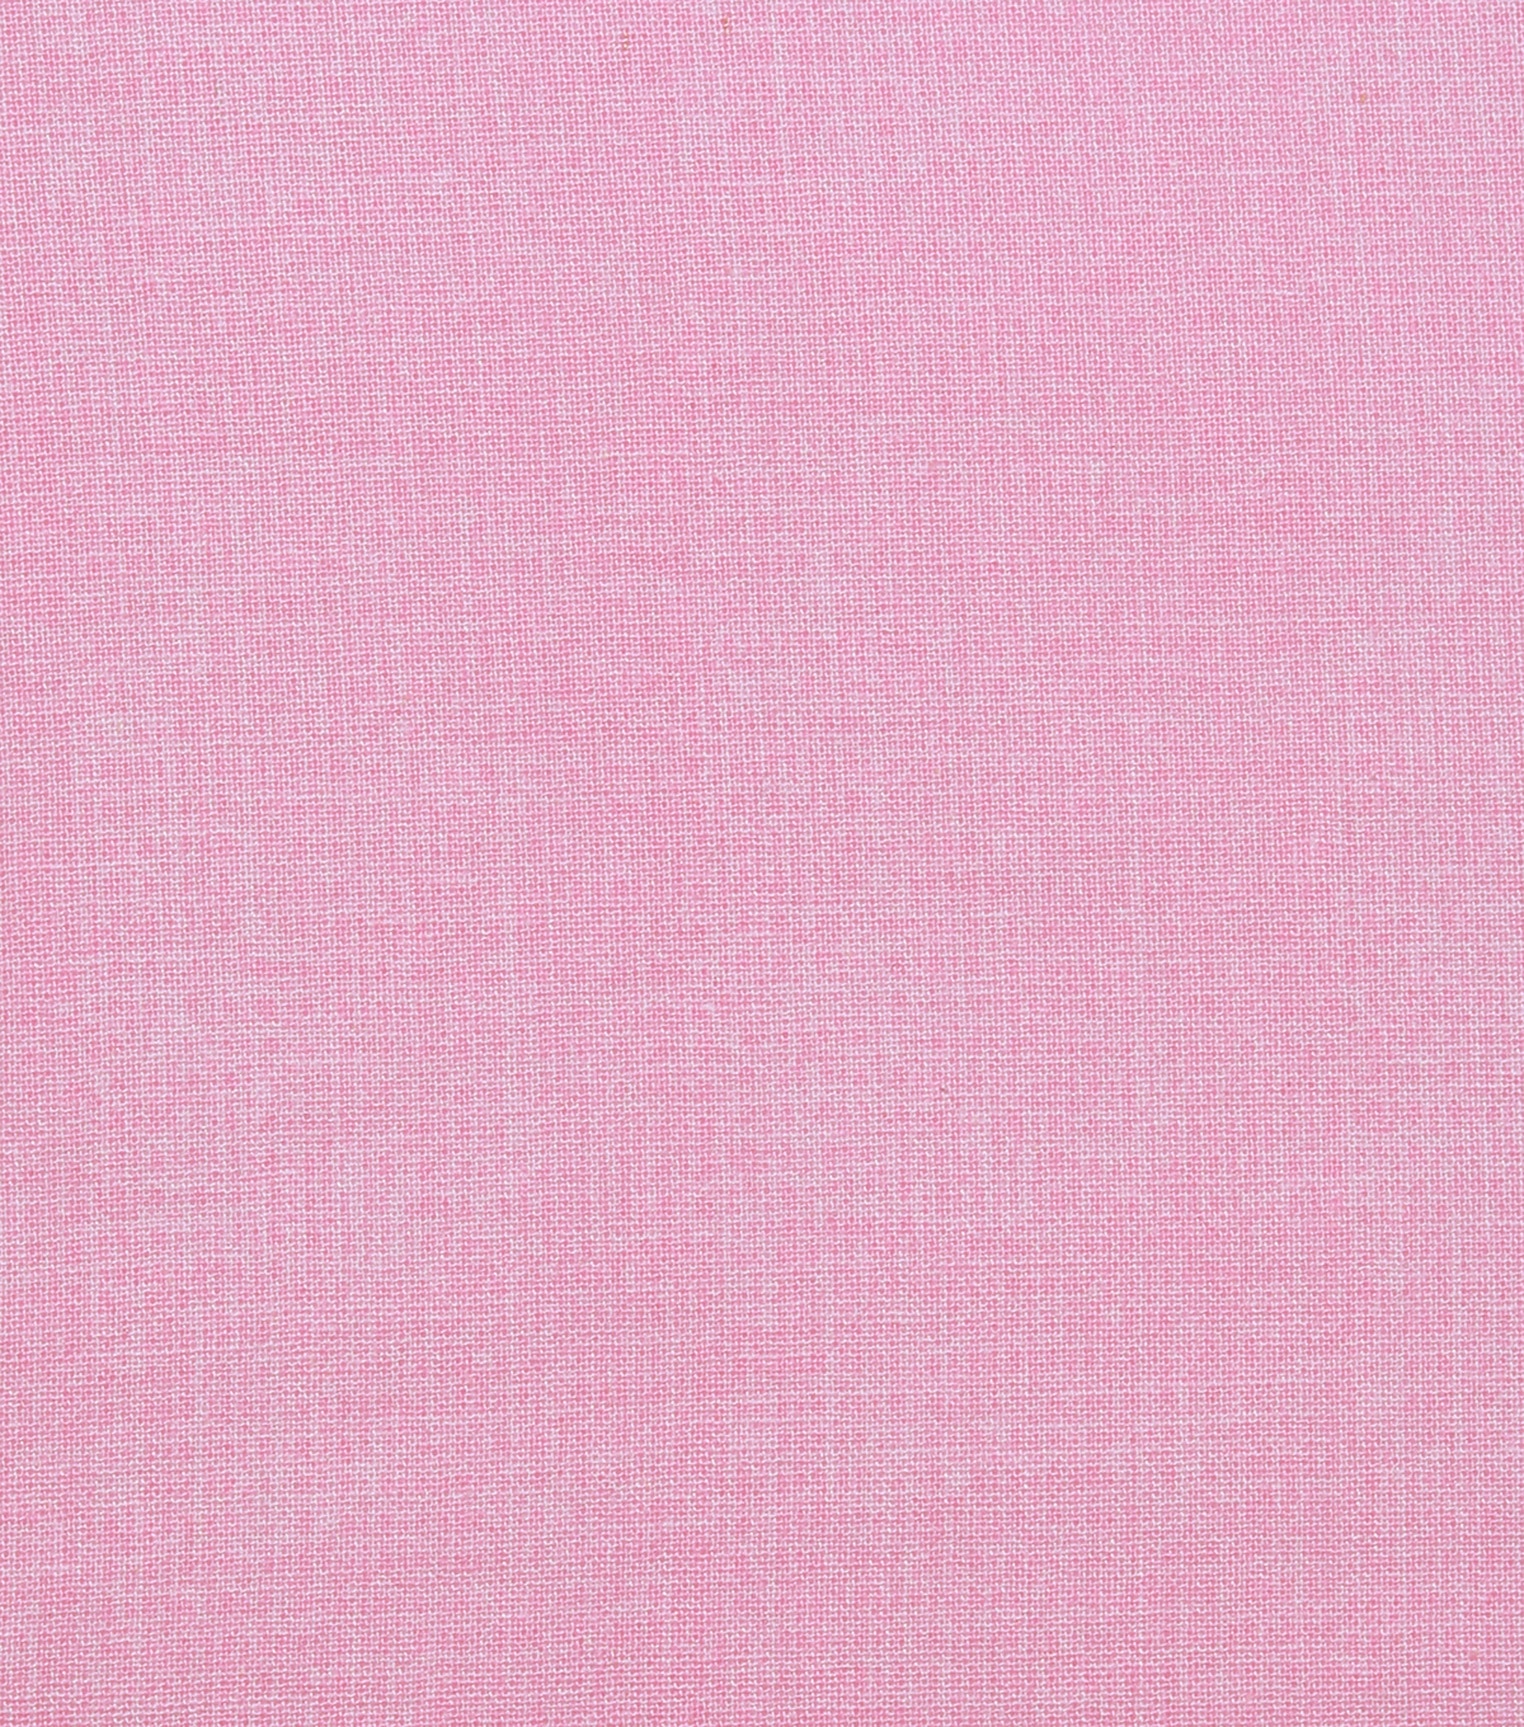 Keepsake Calico Cotton Fabric 43 Light Pink Burlap Texture Joann